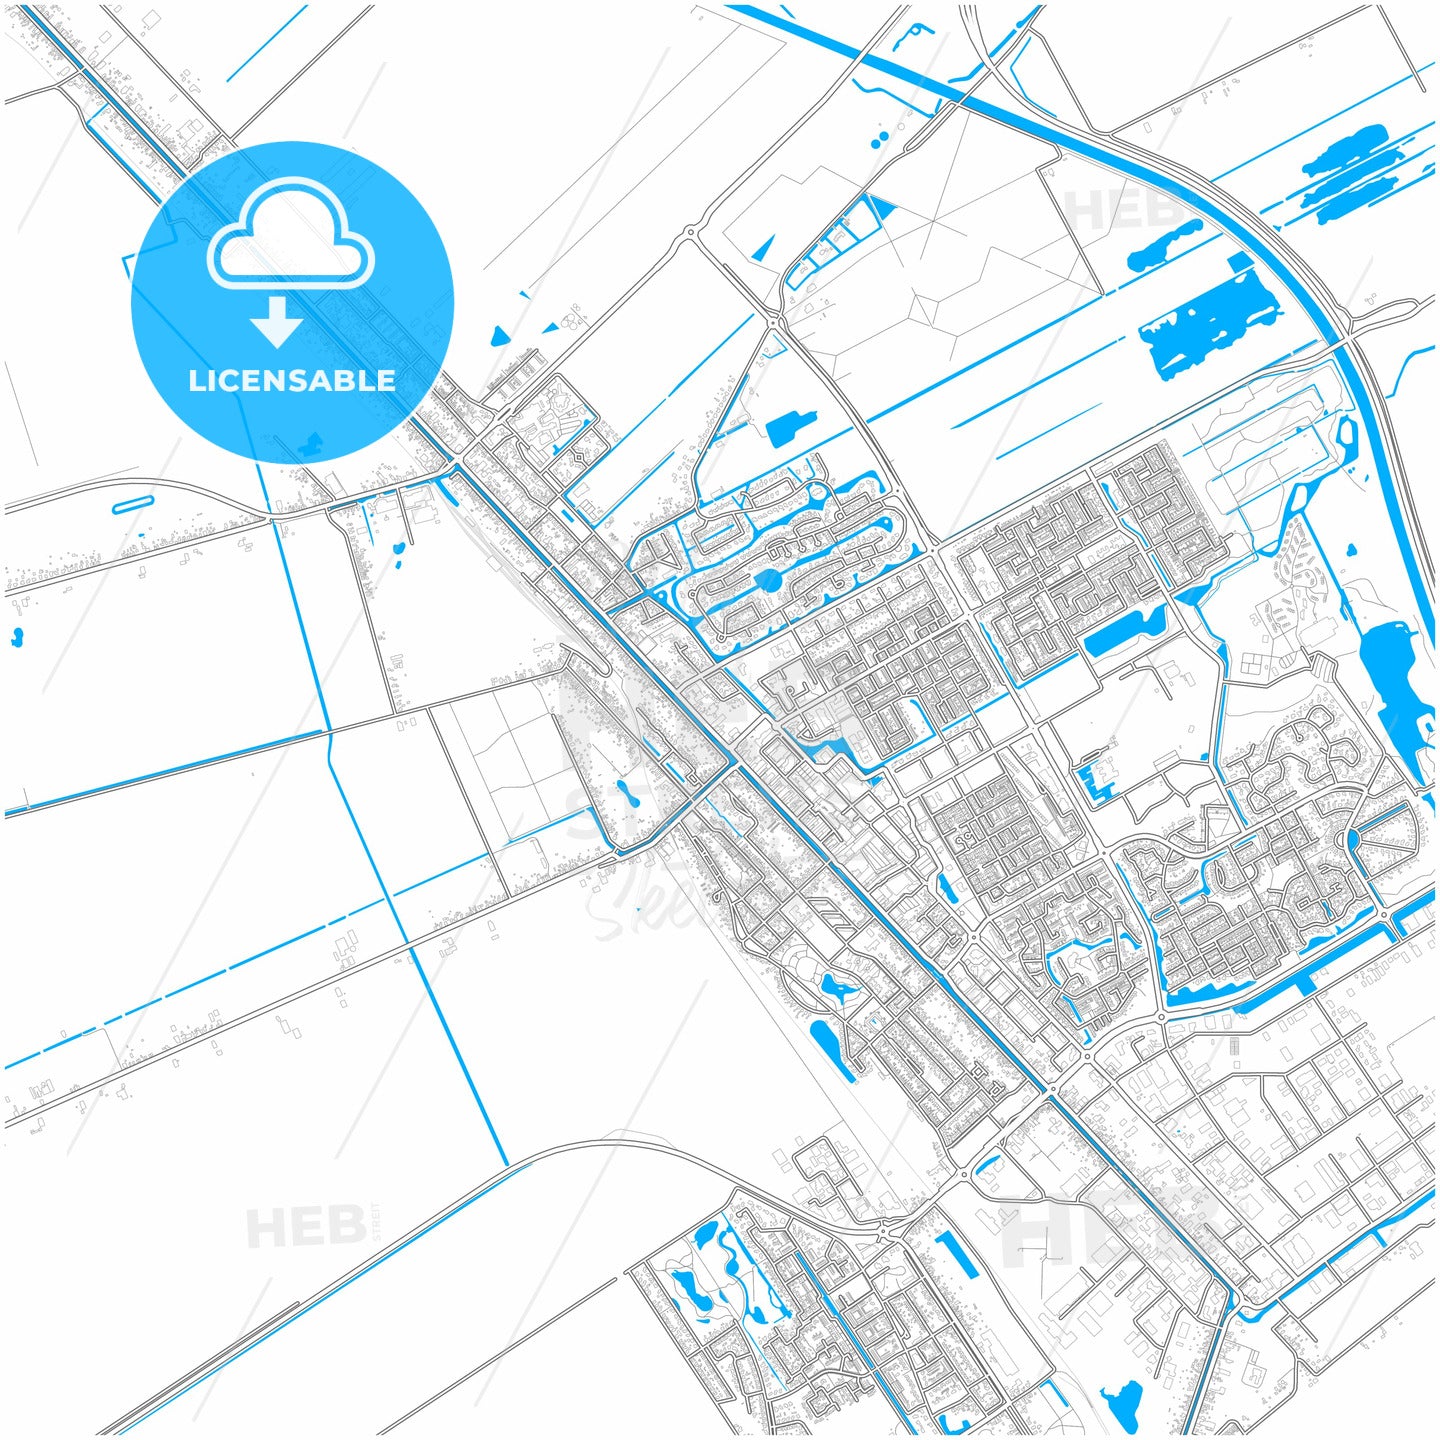 Stadskanaal, Groningen, Netherlands, city map with high quality roads.